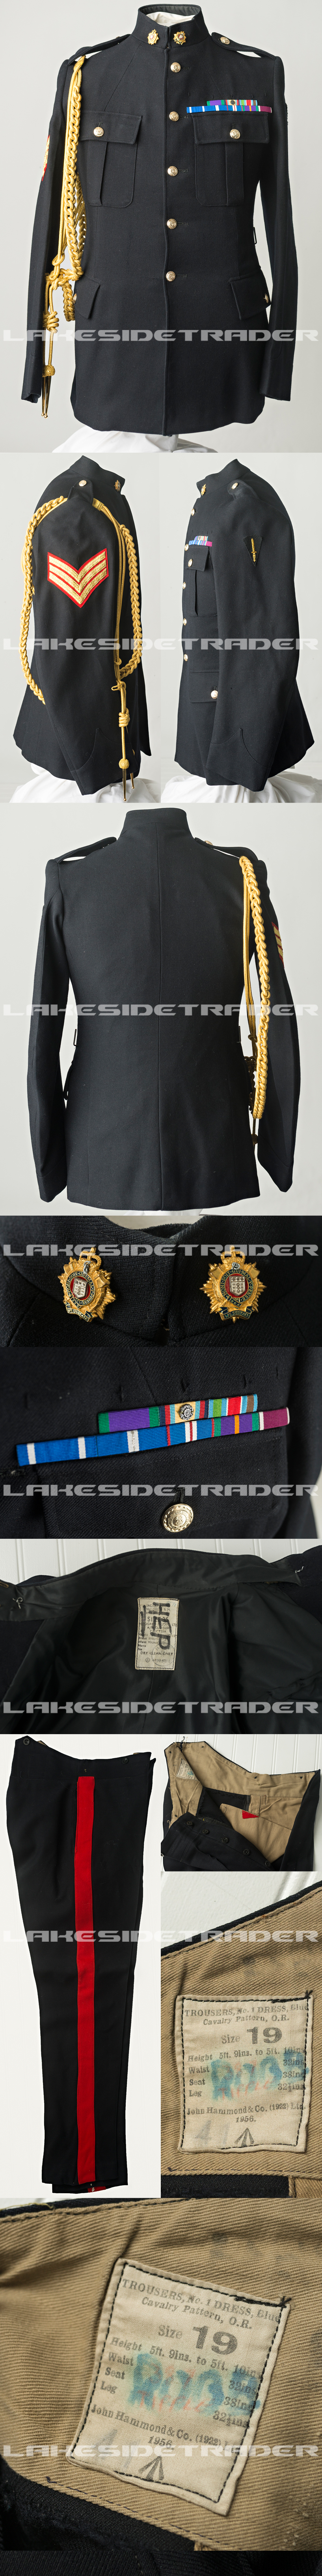 British RLC Sergeant Uniform and Trousers